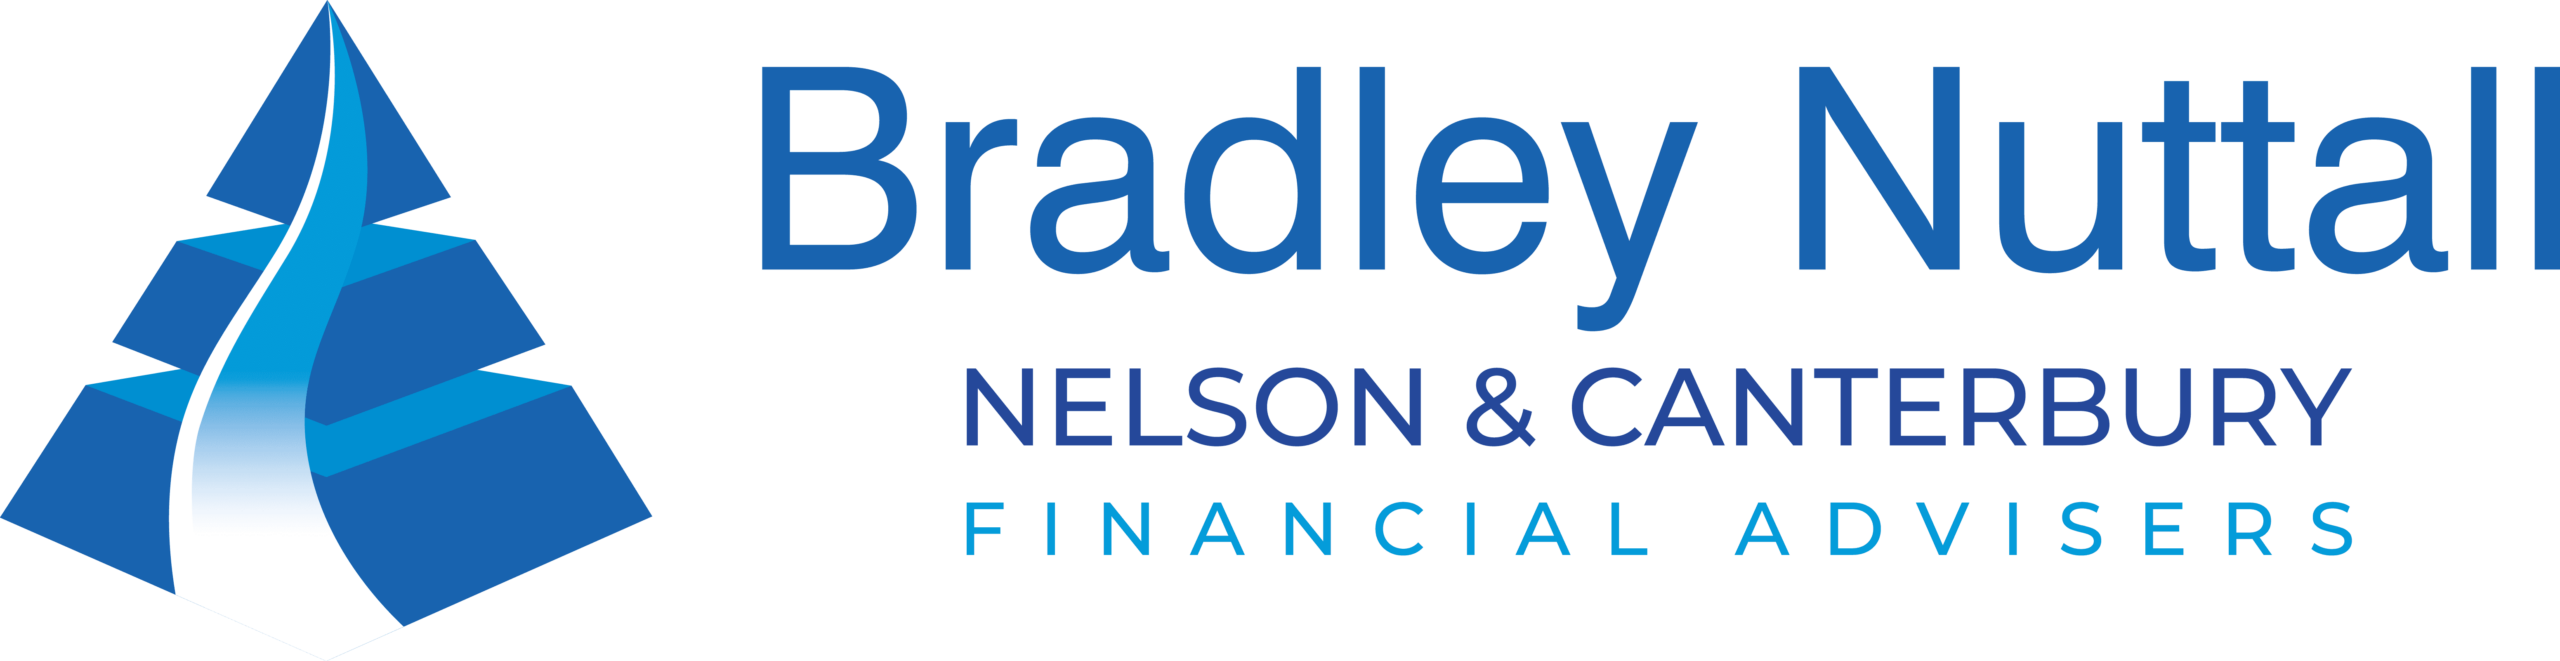 Bradley Nuttall Financial Adviser